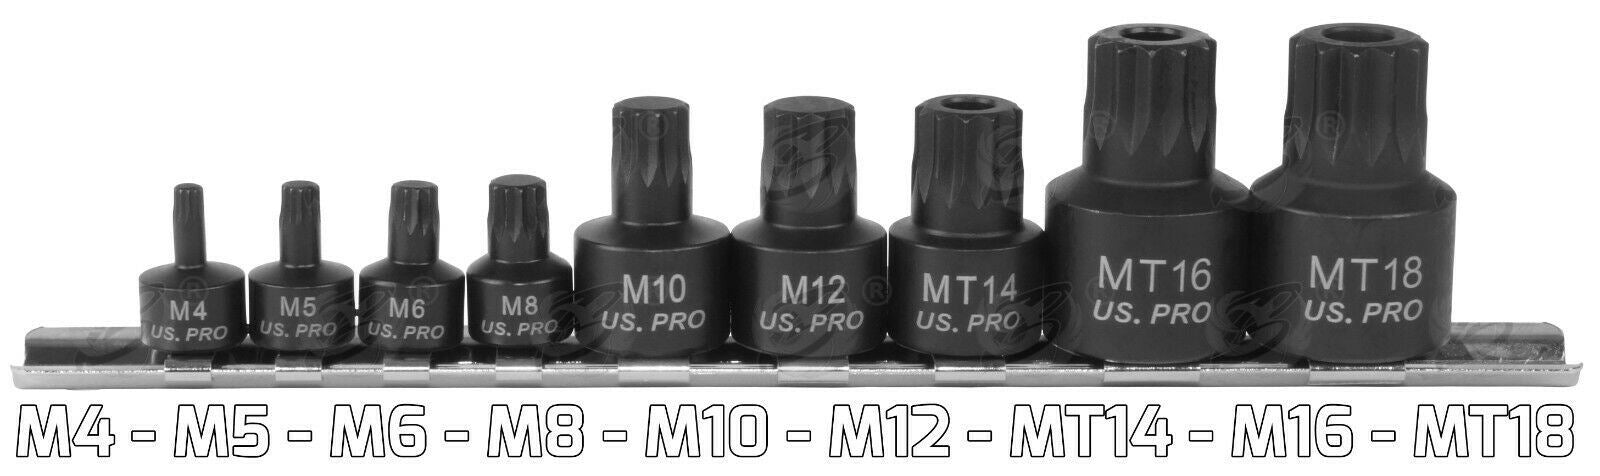 US PRO 9PCS 1/4" & 3/8" & 1/2" DRIVE STUBBY IMPACT SPLINE BIT SOCKETS M4 - M18